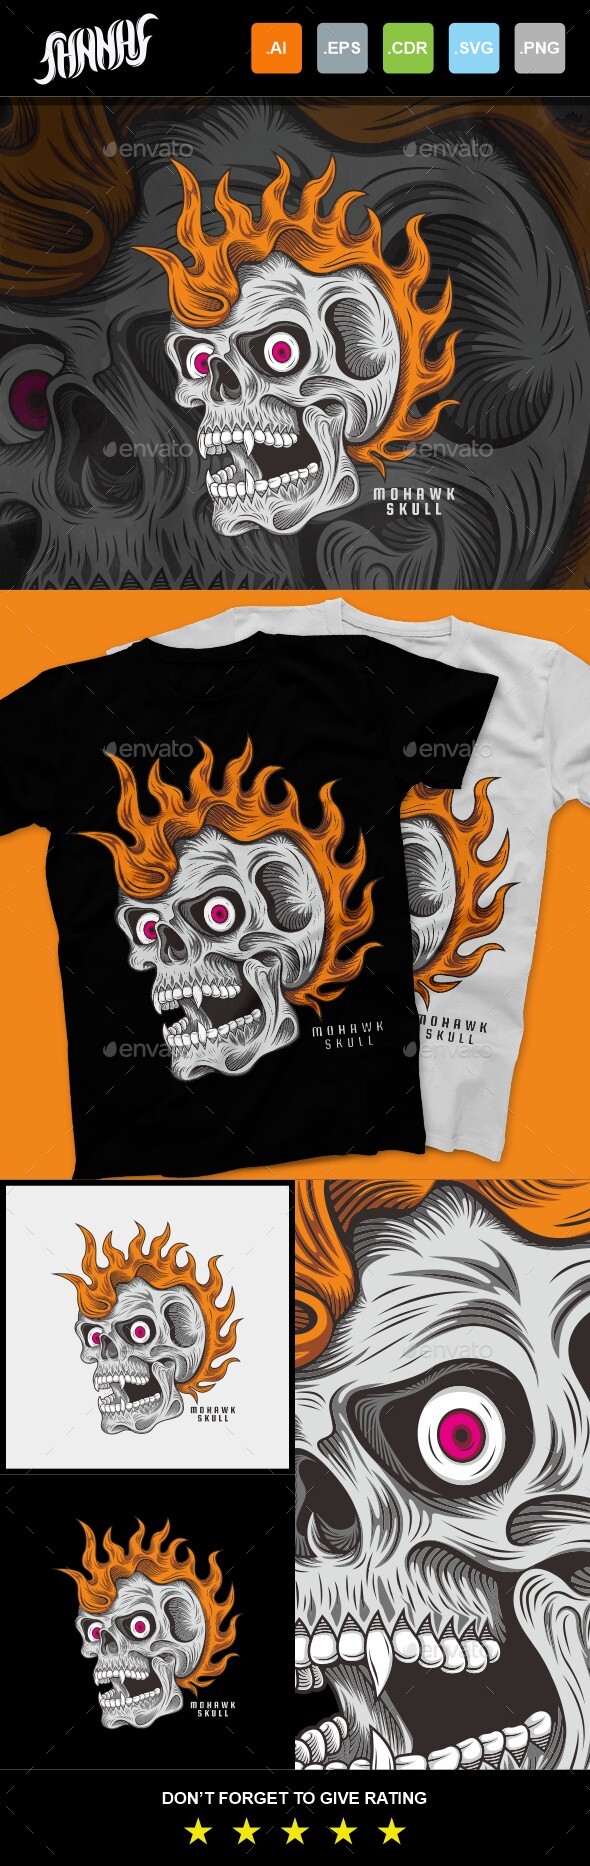 [DOWNLOAD]Mohawk Skull T-Shirt Design